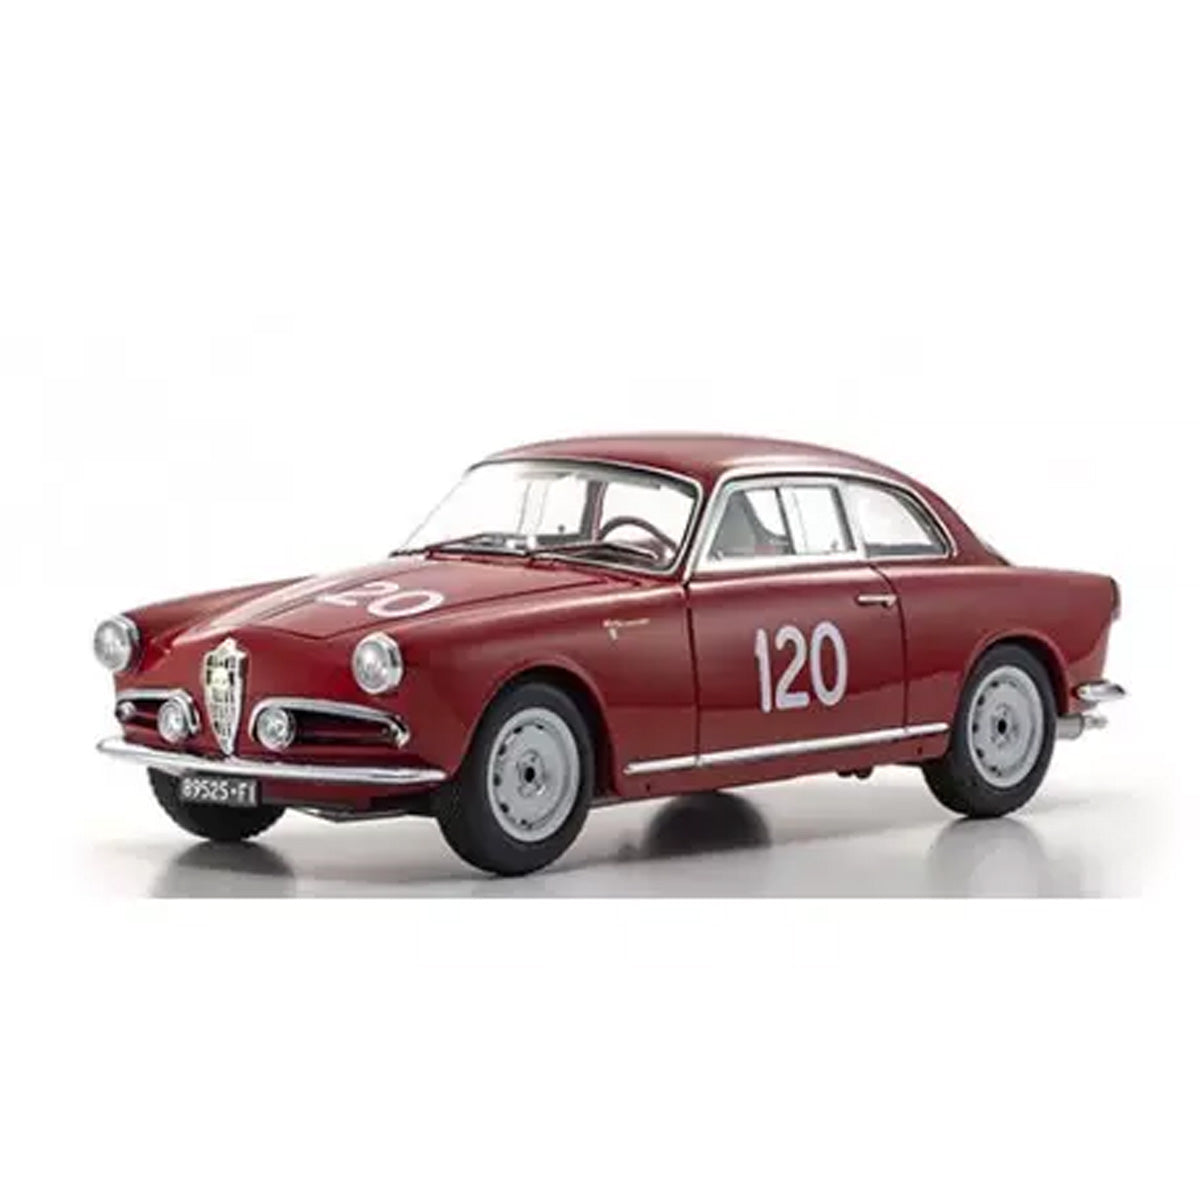 Alfa Romeo Giulietta SV 1956 Mille Miglia (#120) - 1:18 Scale Diecast Model Car